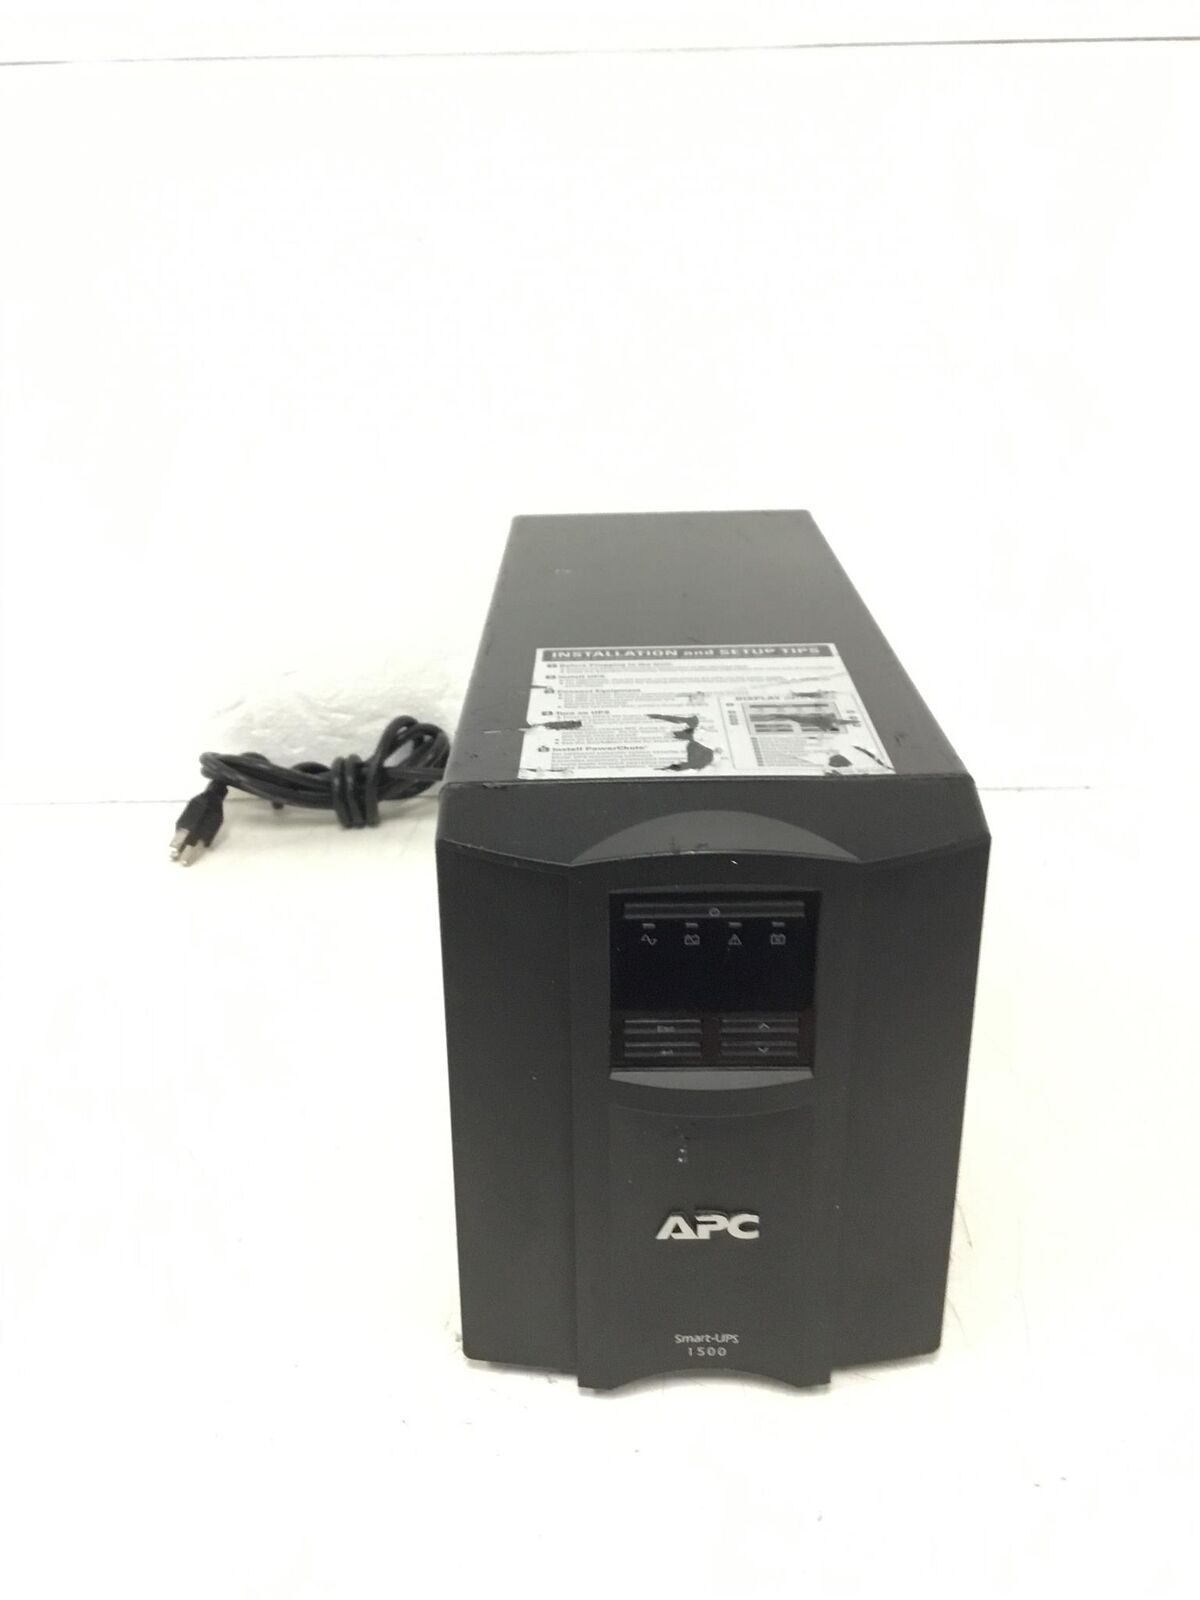 APC Smart-UPS 1500 - SMT1500 8 Outlets Uninterruptible Power Supply QTY No Batts